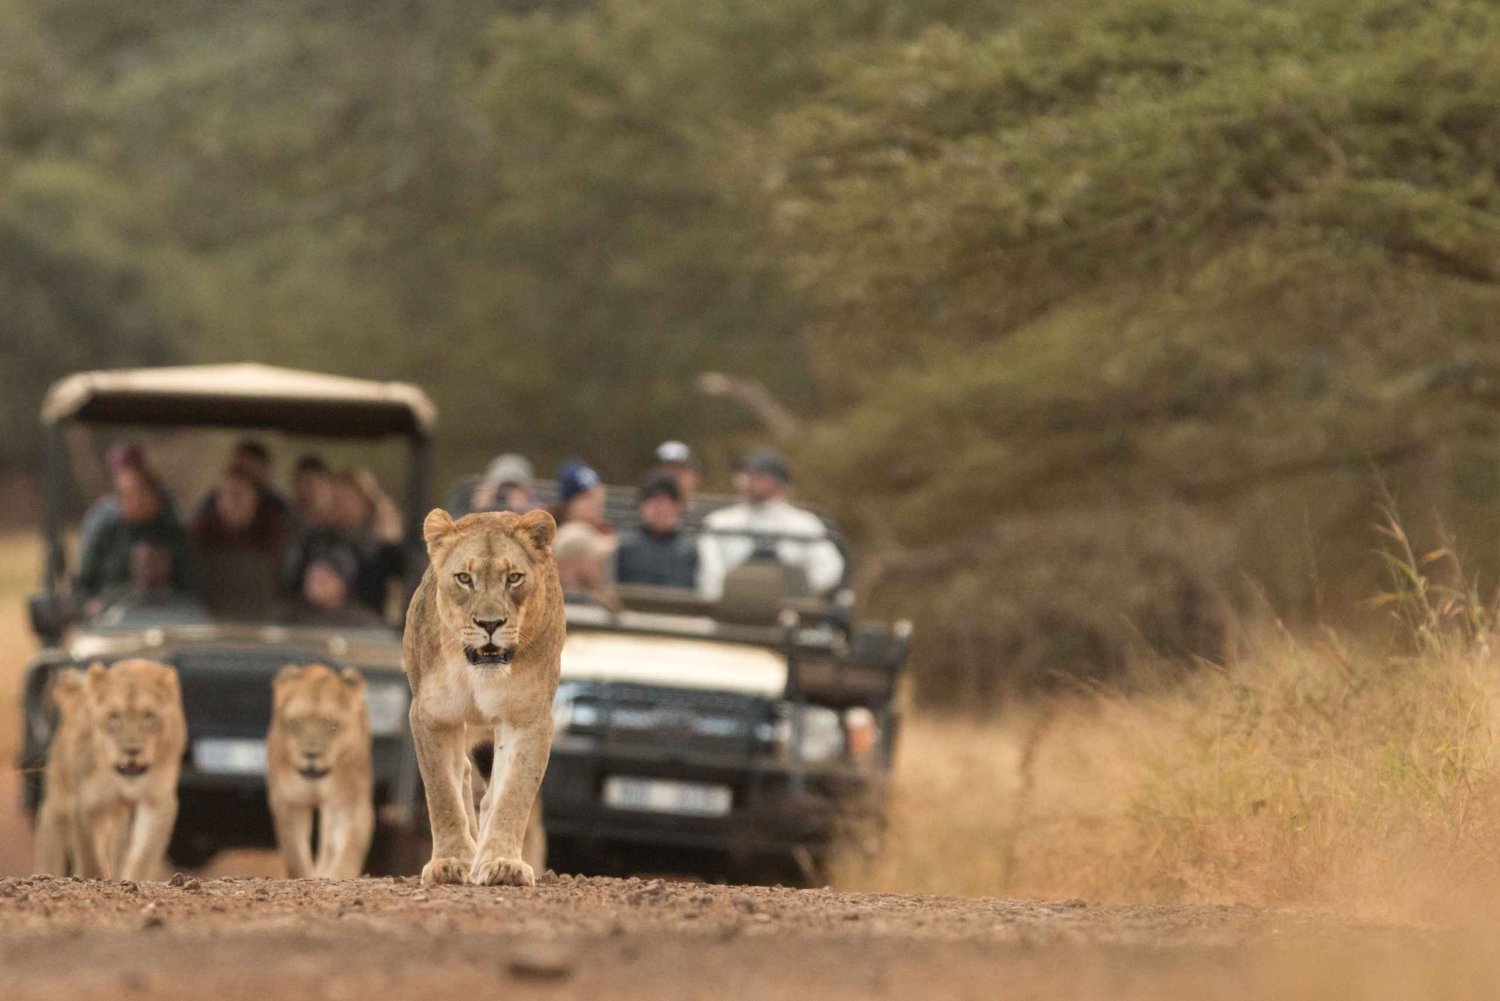 From Durban: Wildlife Lovers Big 5 Safari at 2 Game Reserves